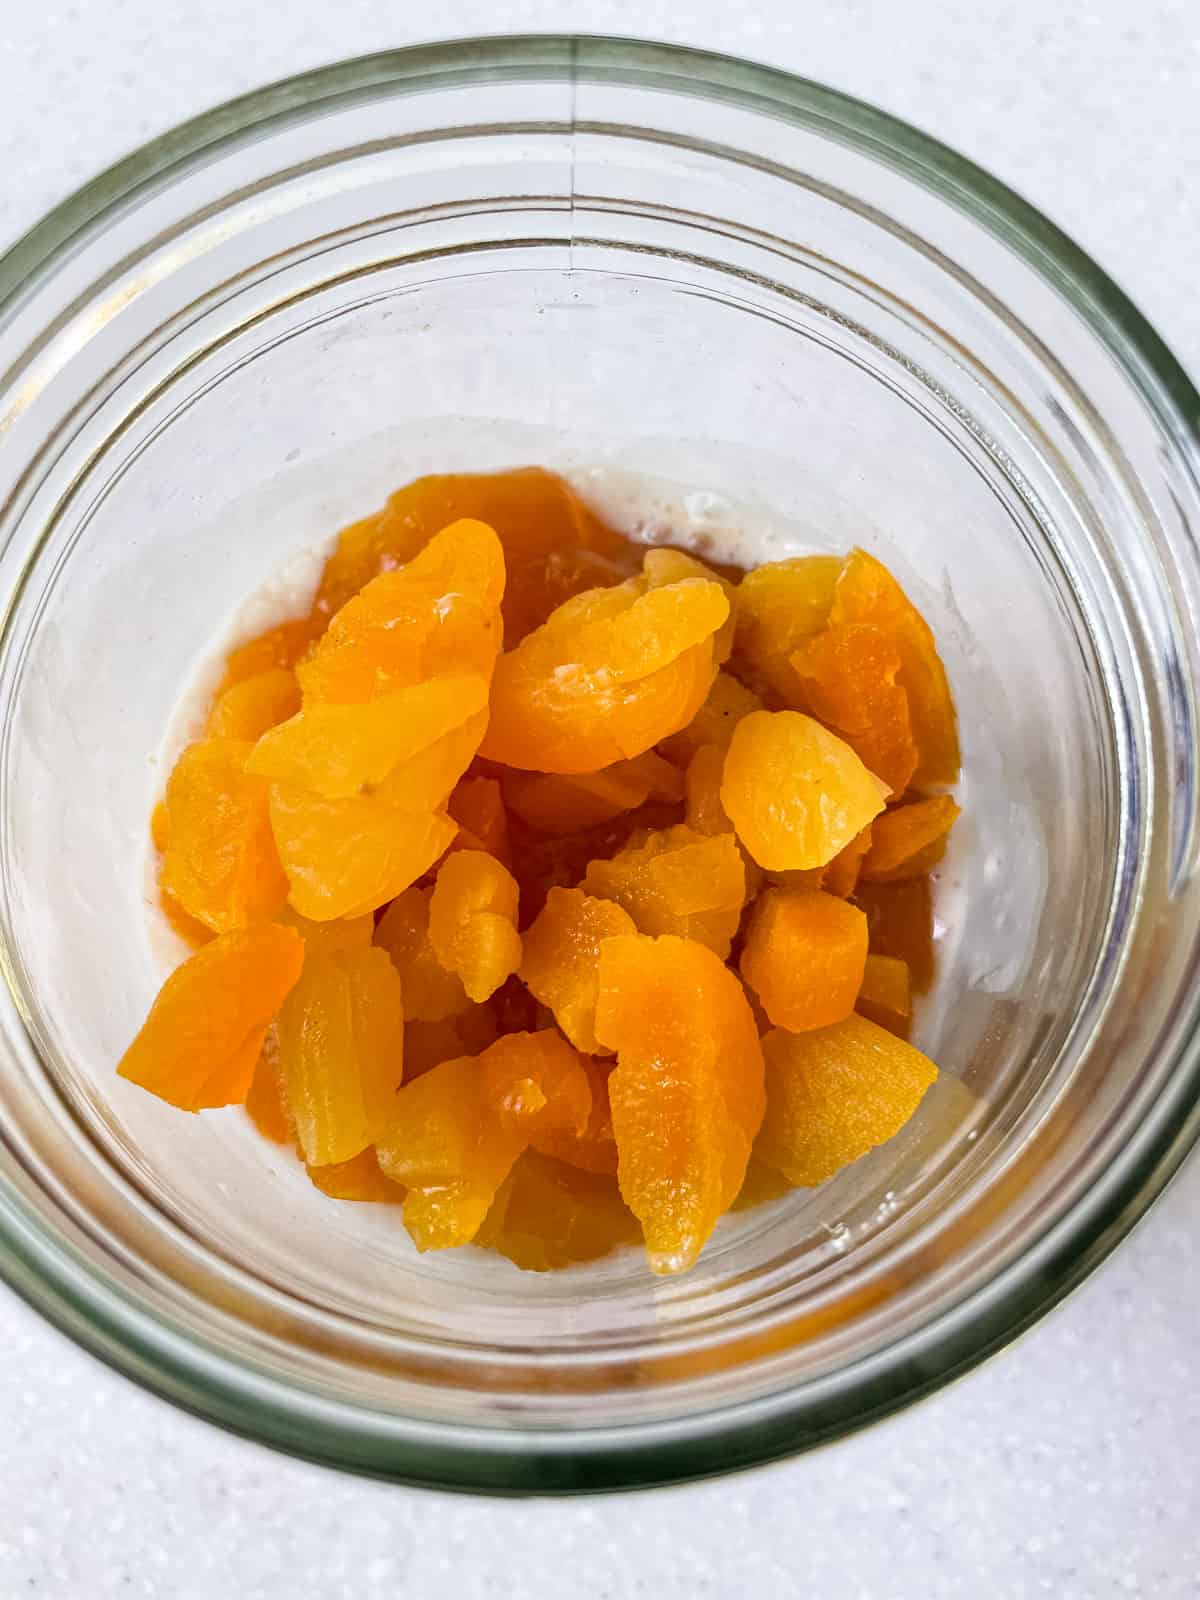 add chopped dried apricots to jar